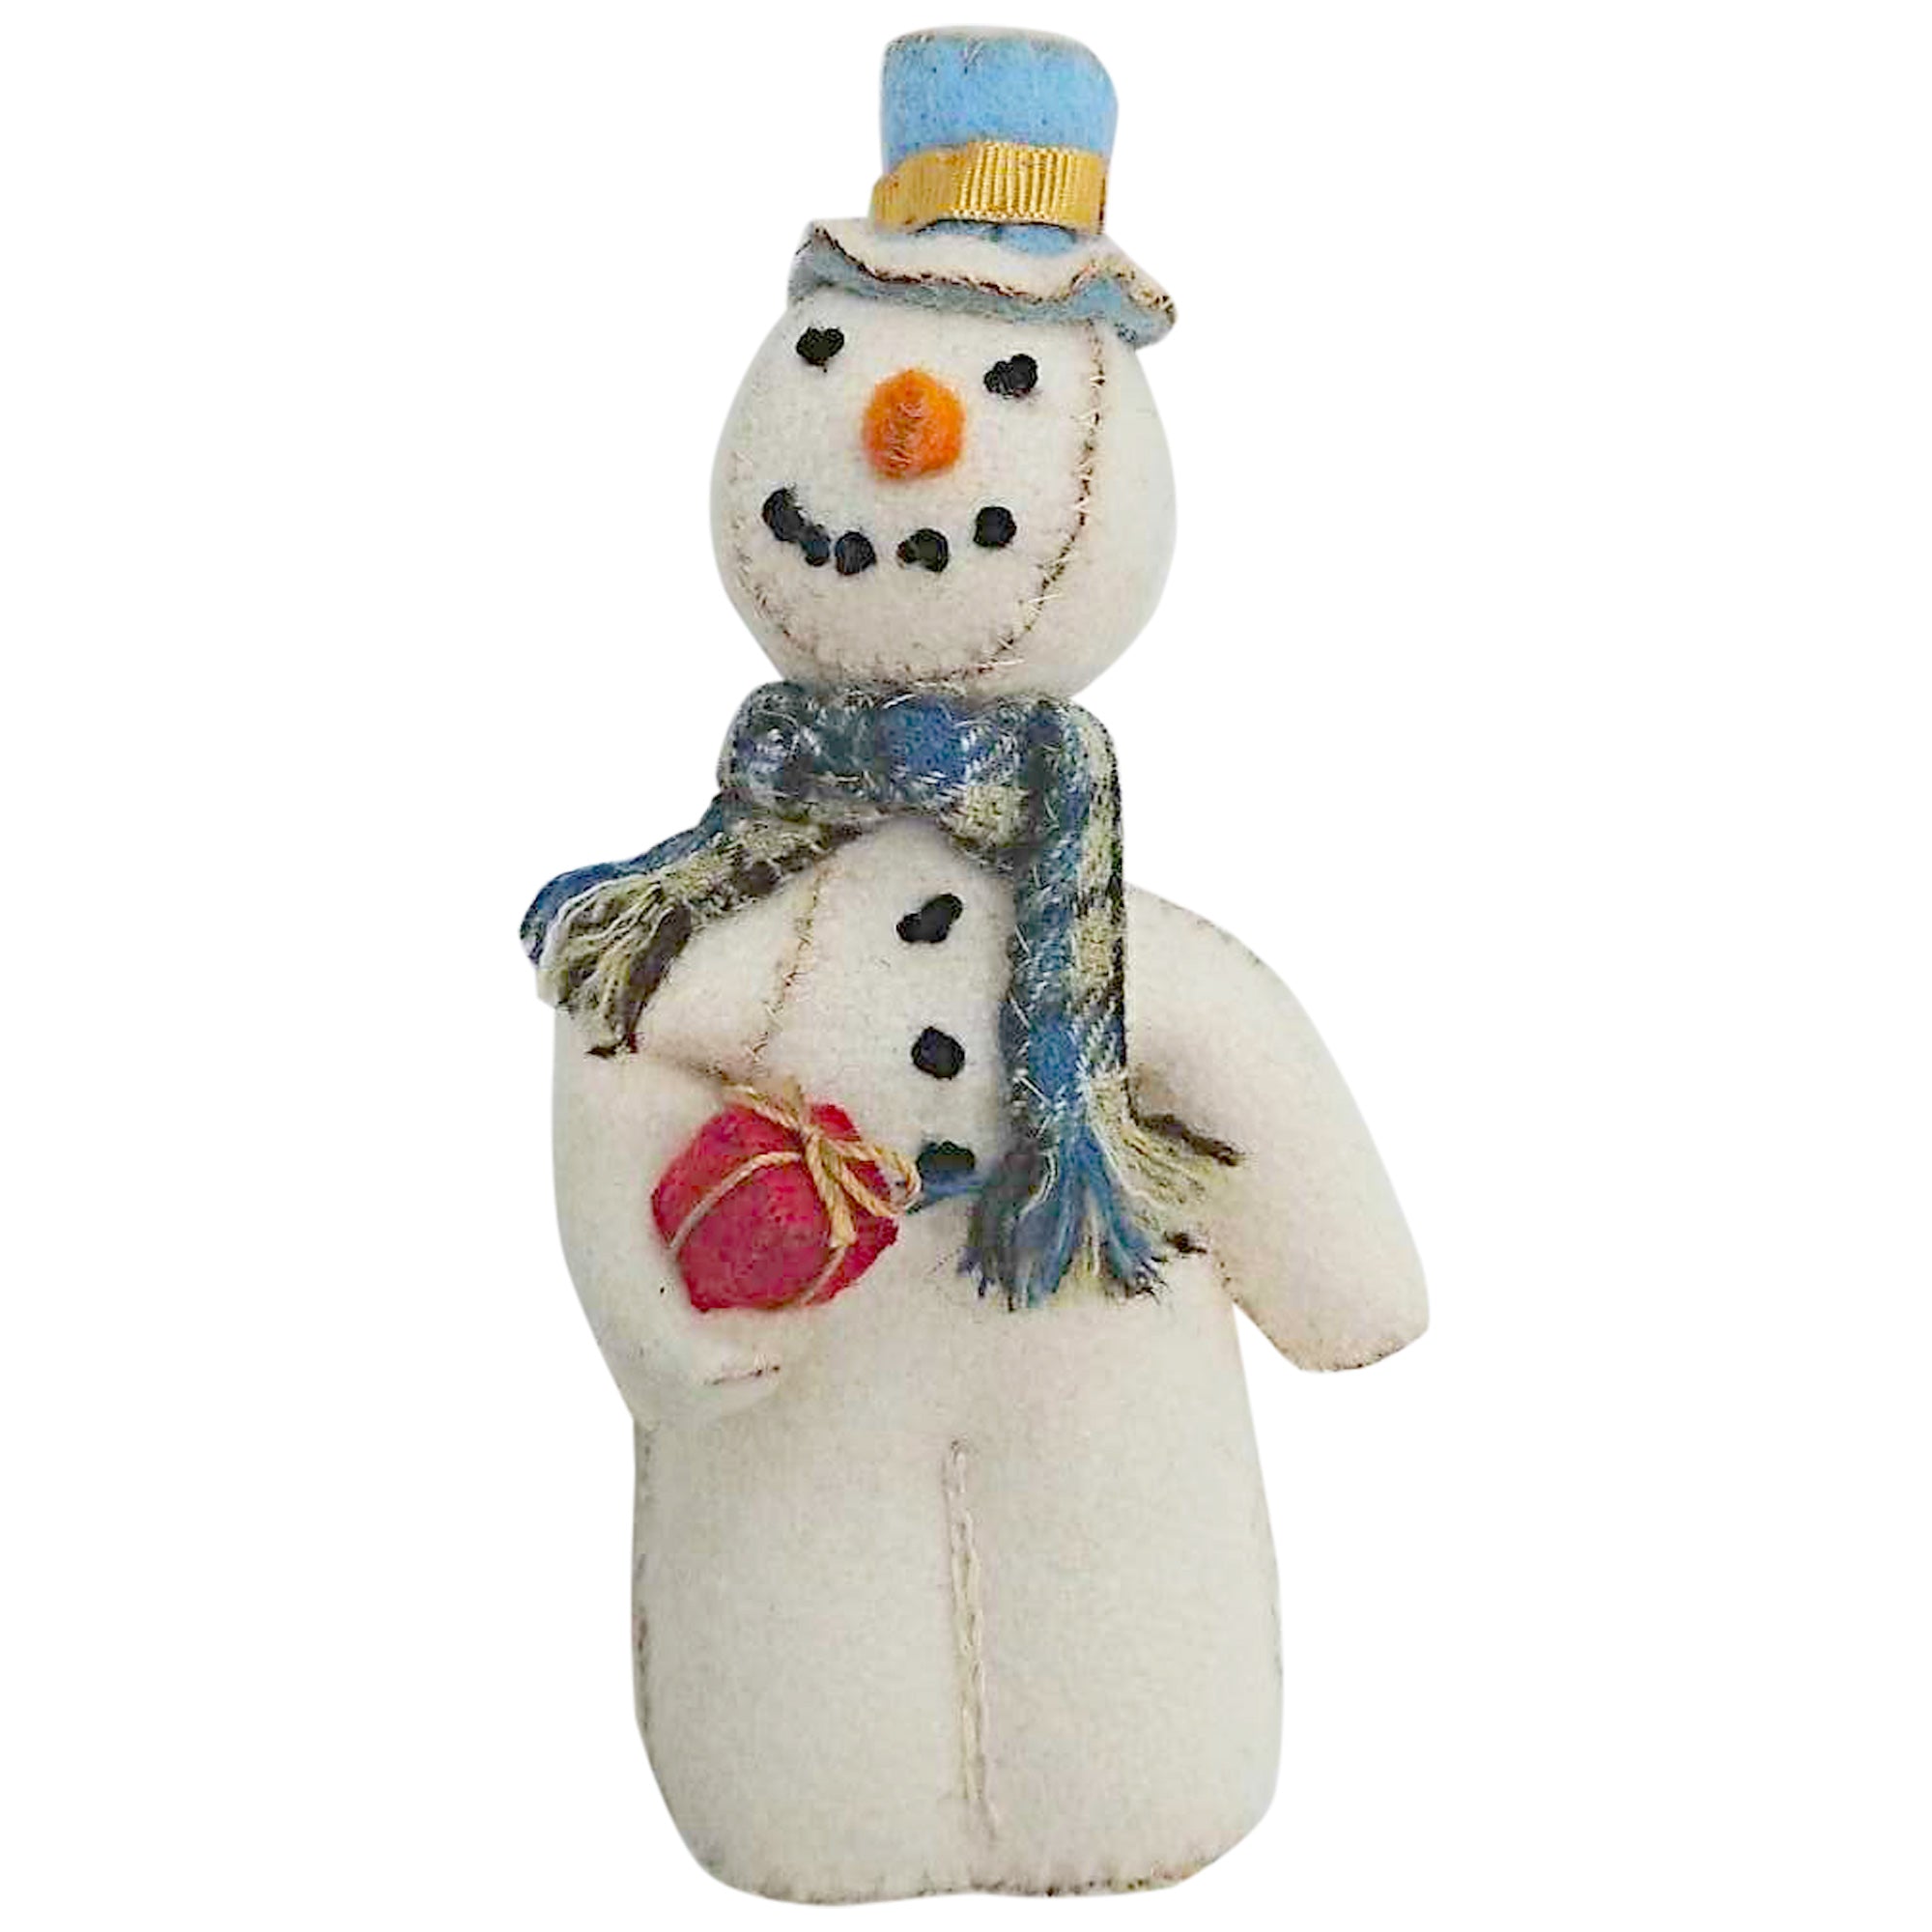 Icy_the_Snowman_Christmas_Decoration.jpg